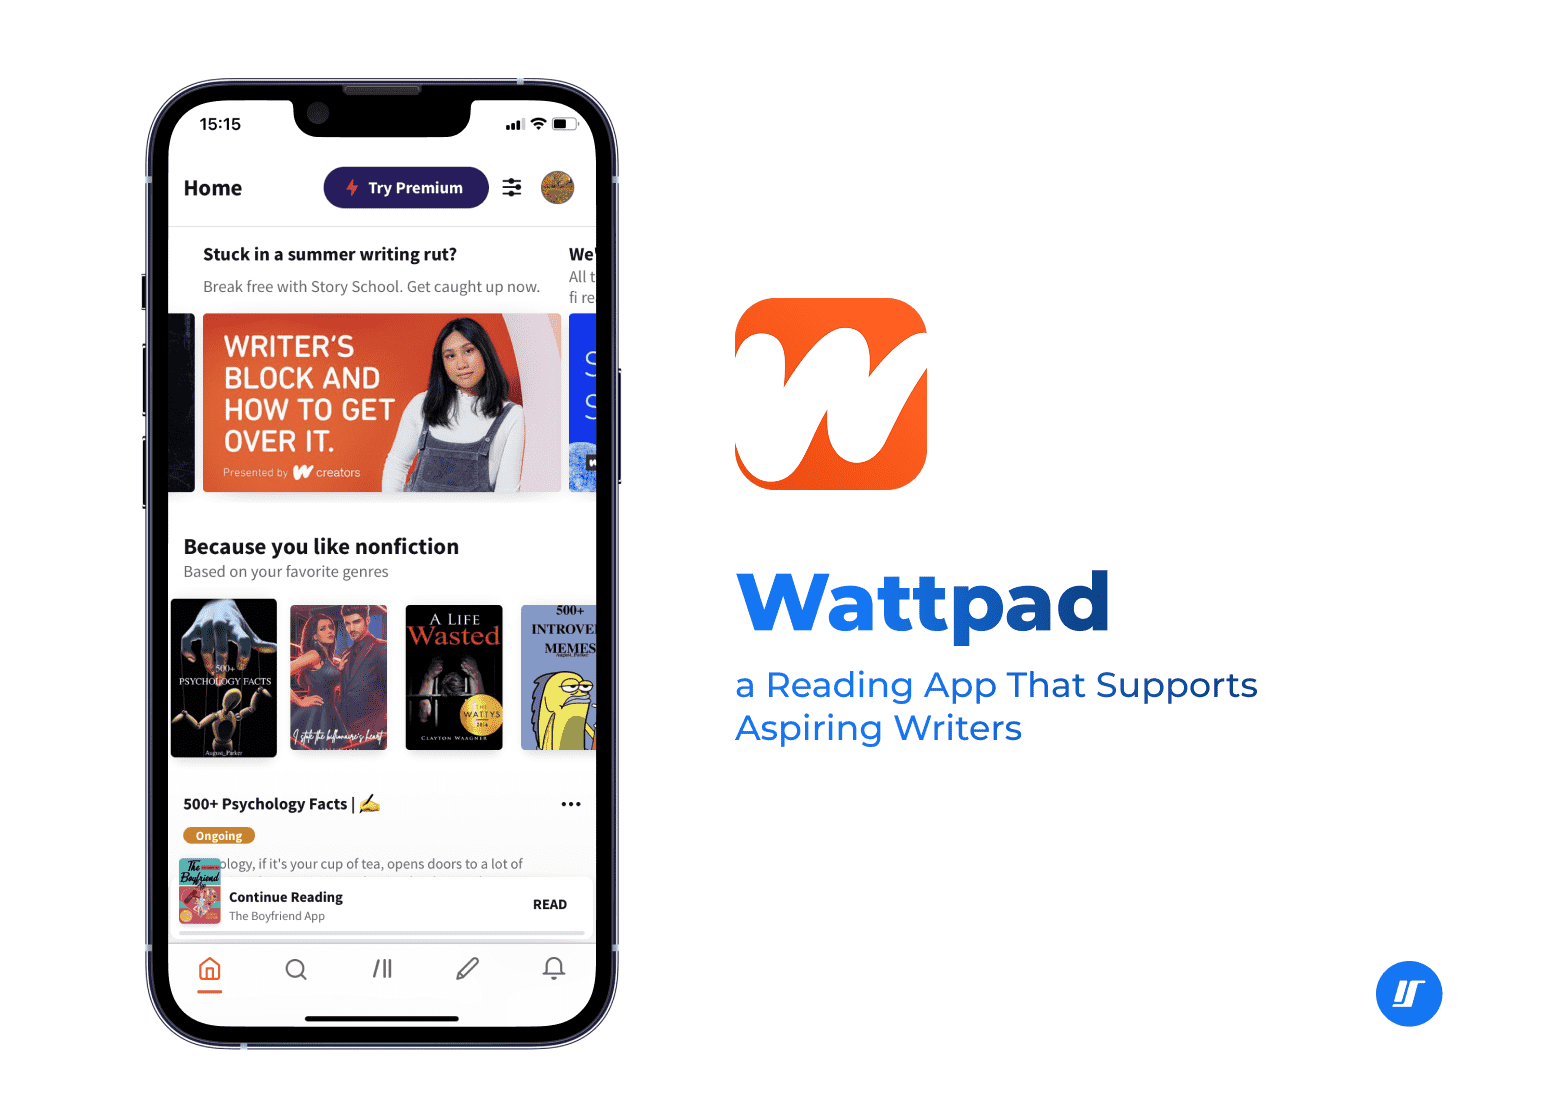 Wattpad app screenshot on the iPhone screen